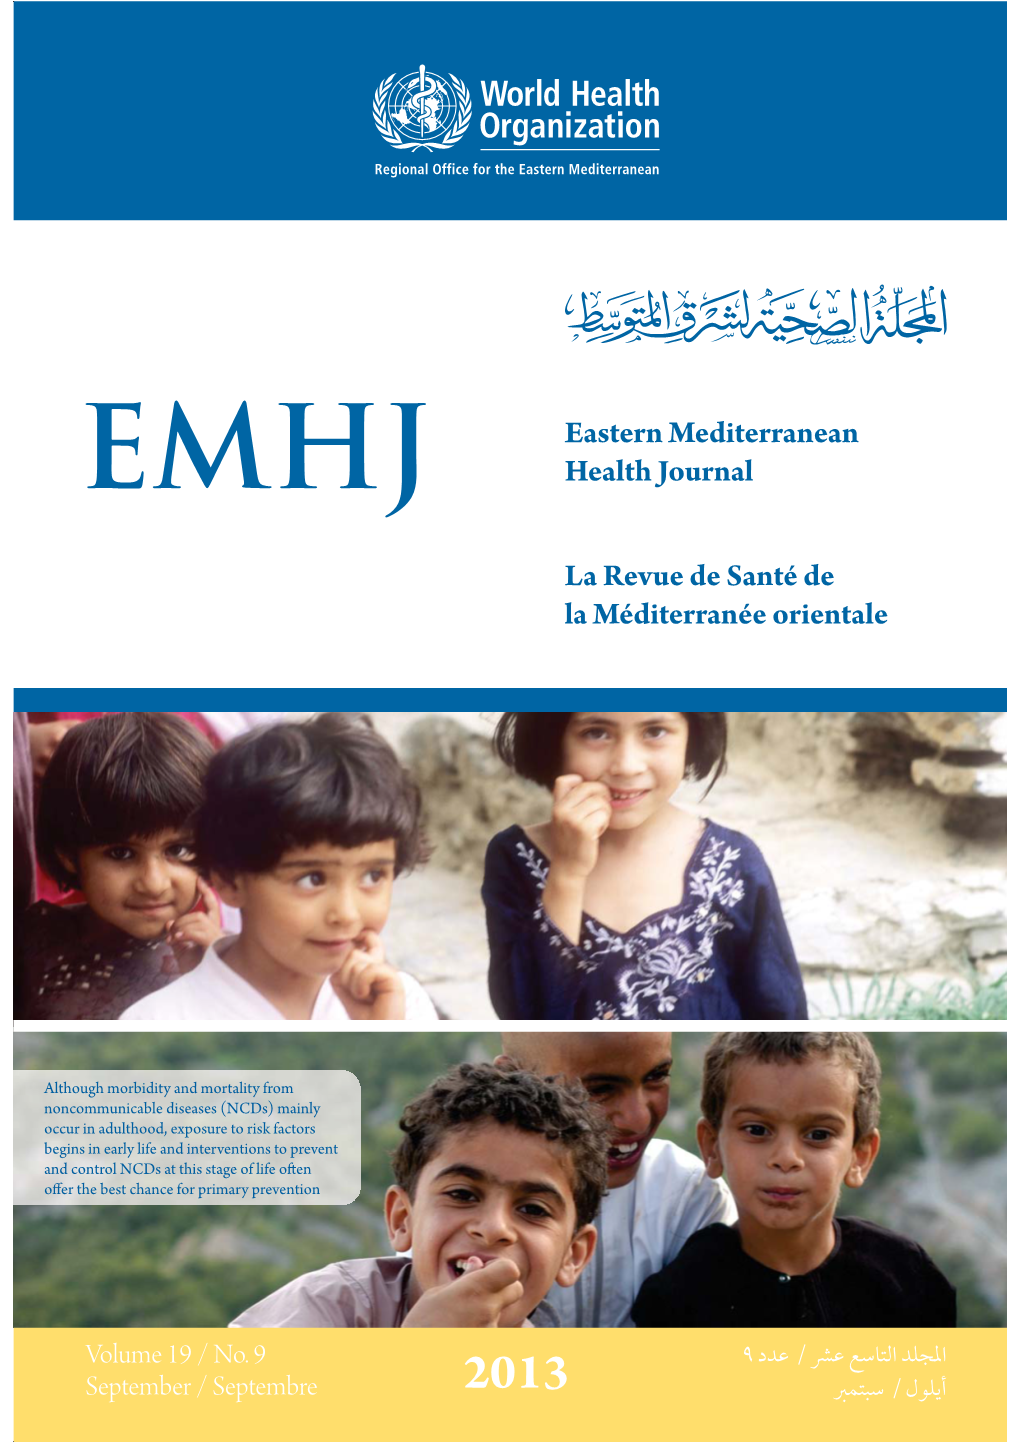 Eastern Mediterranean Health Journal La Revue De Santé De La